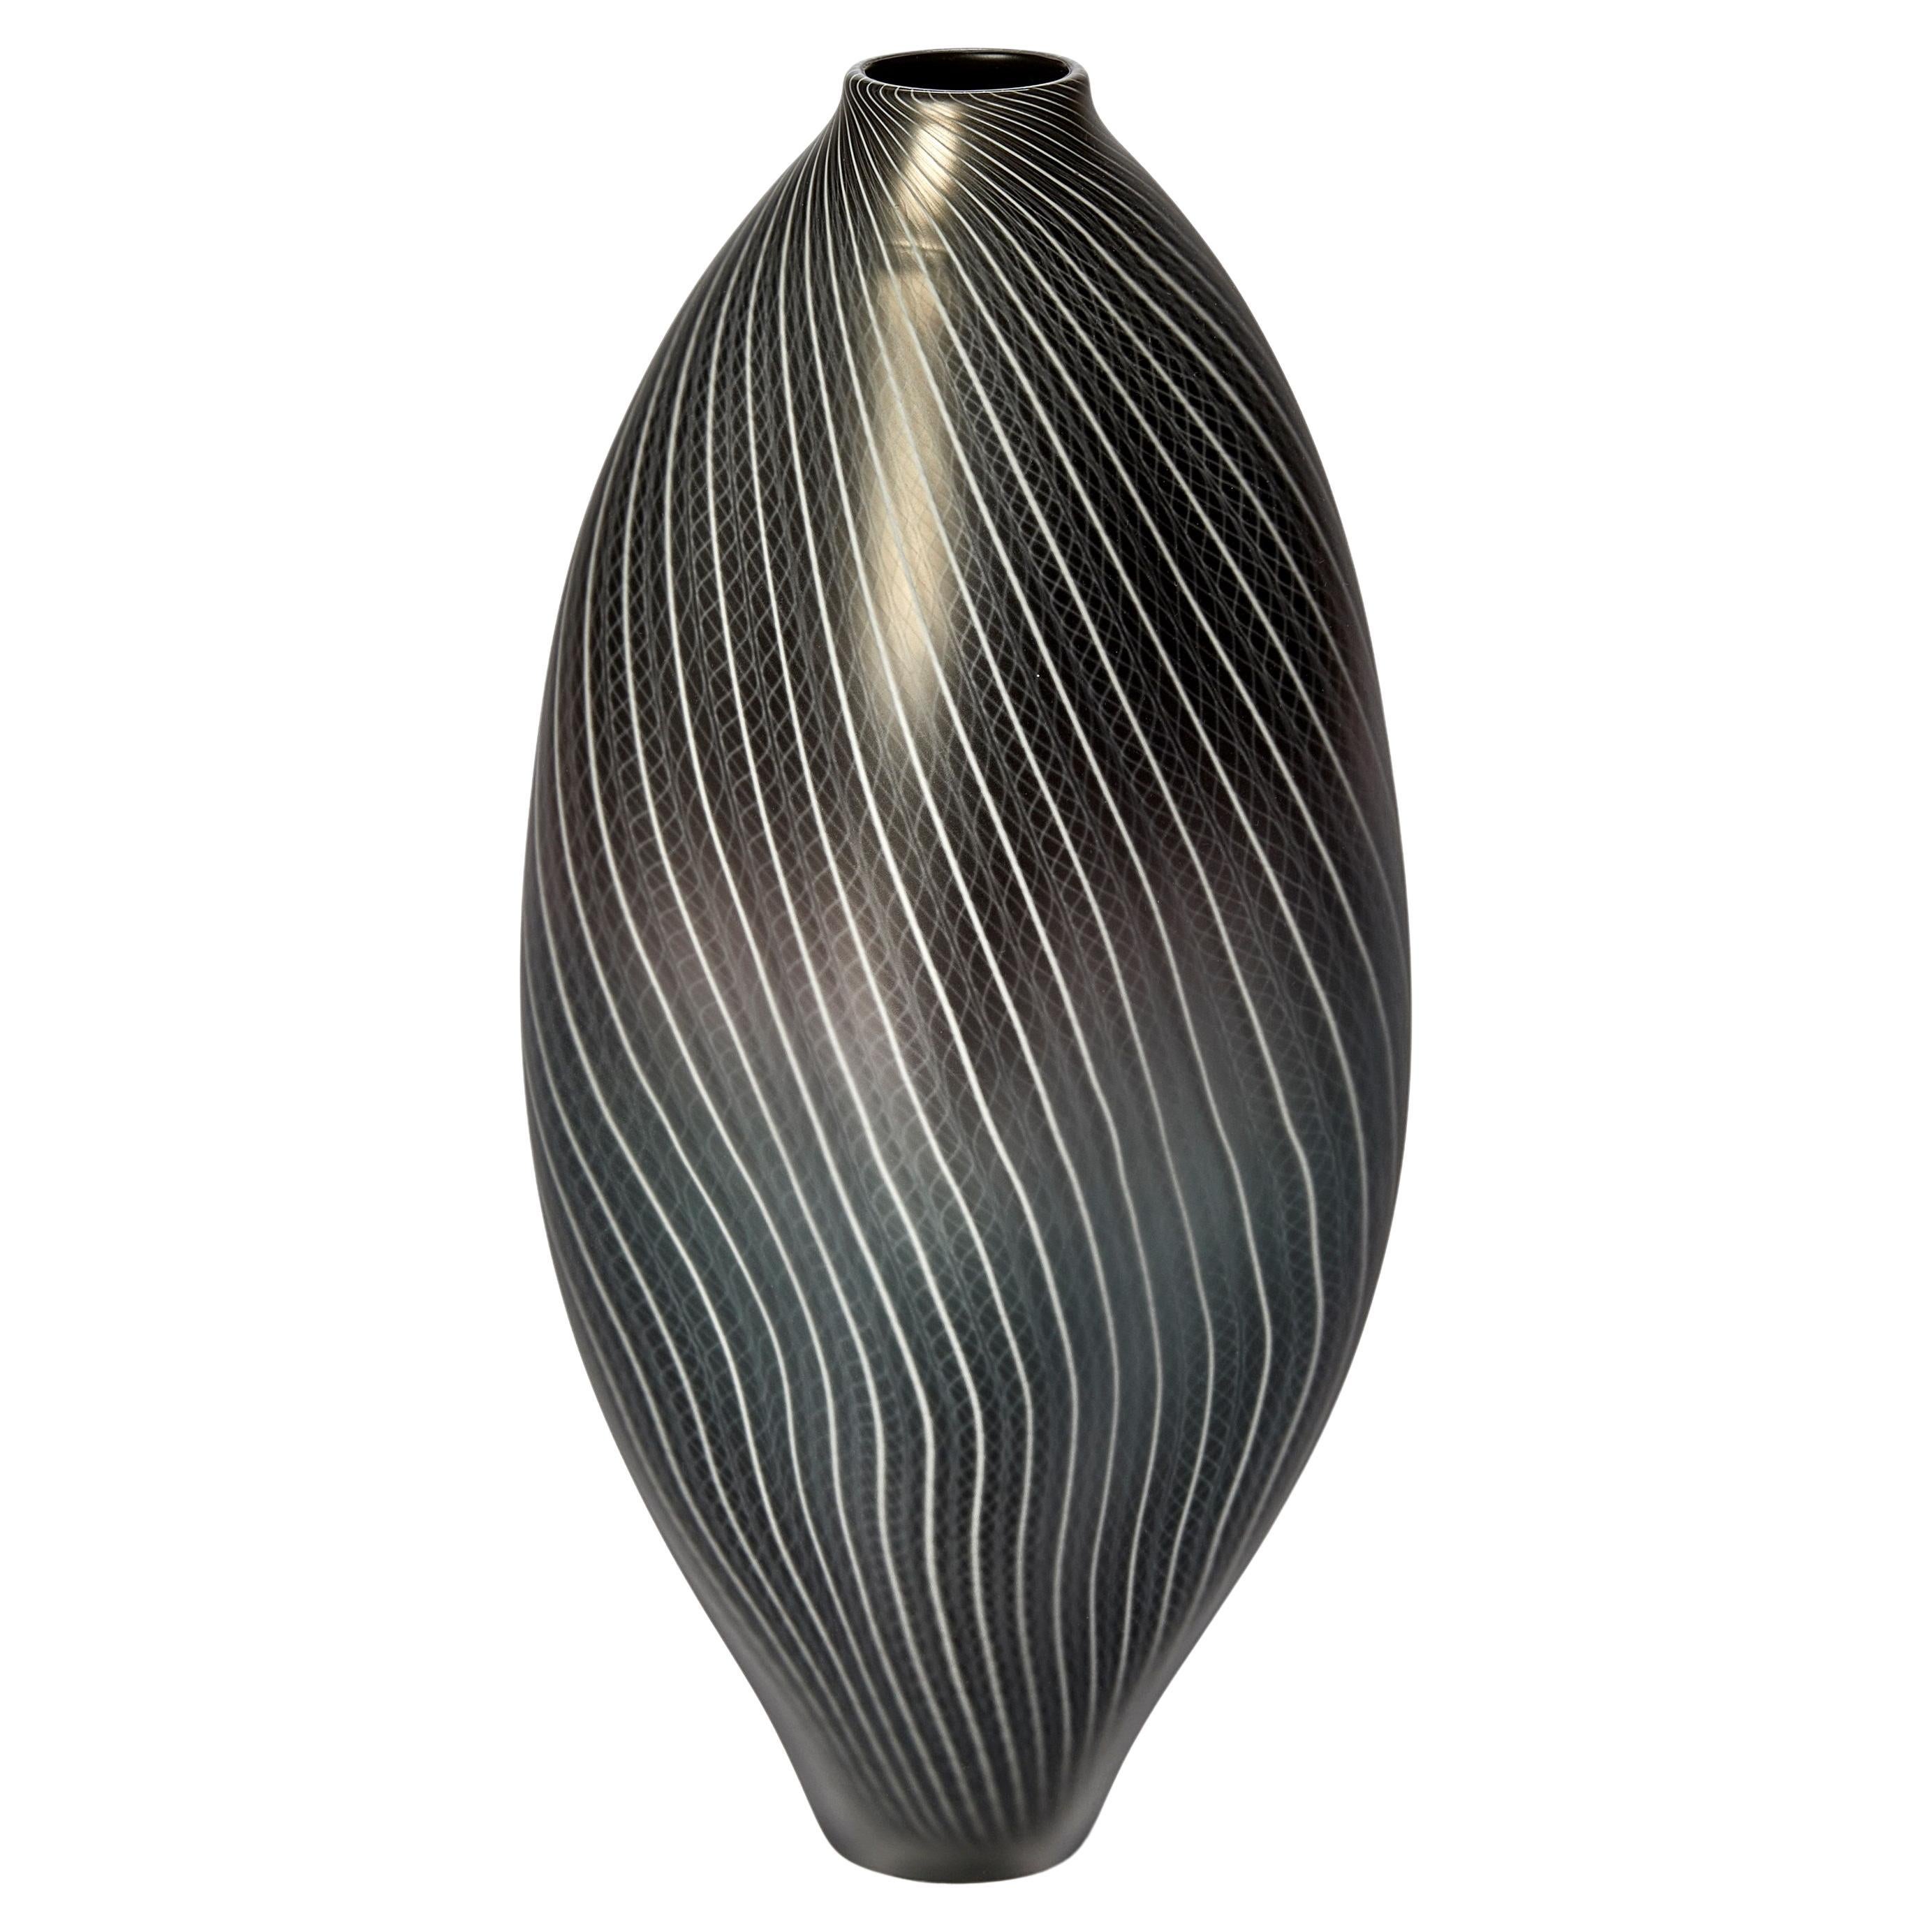  Stratiform 2.1.001, white & metallic grey handblown glass vessel by Liam Reeves For Sale